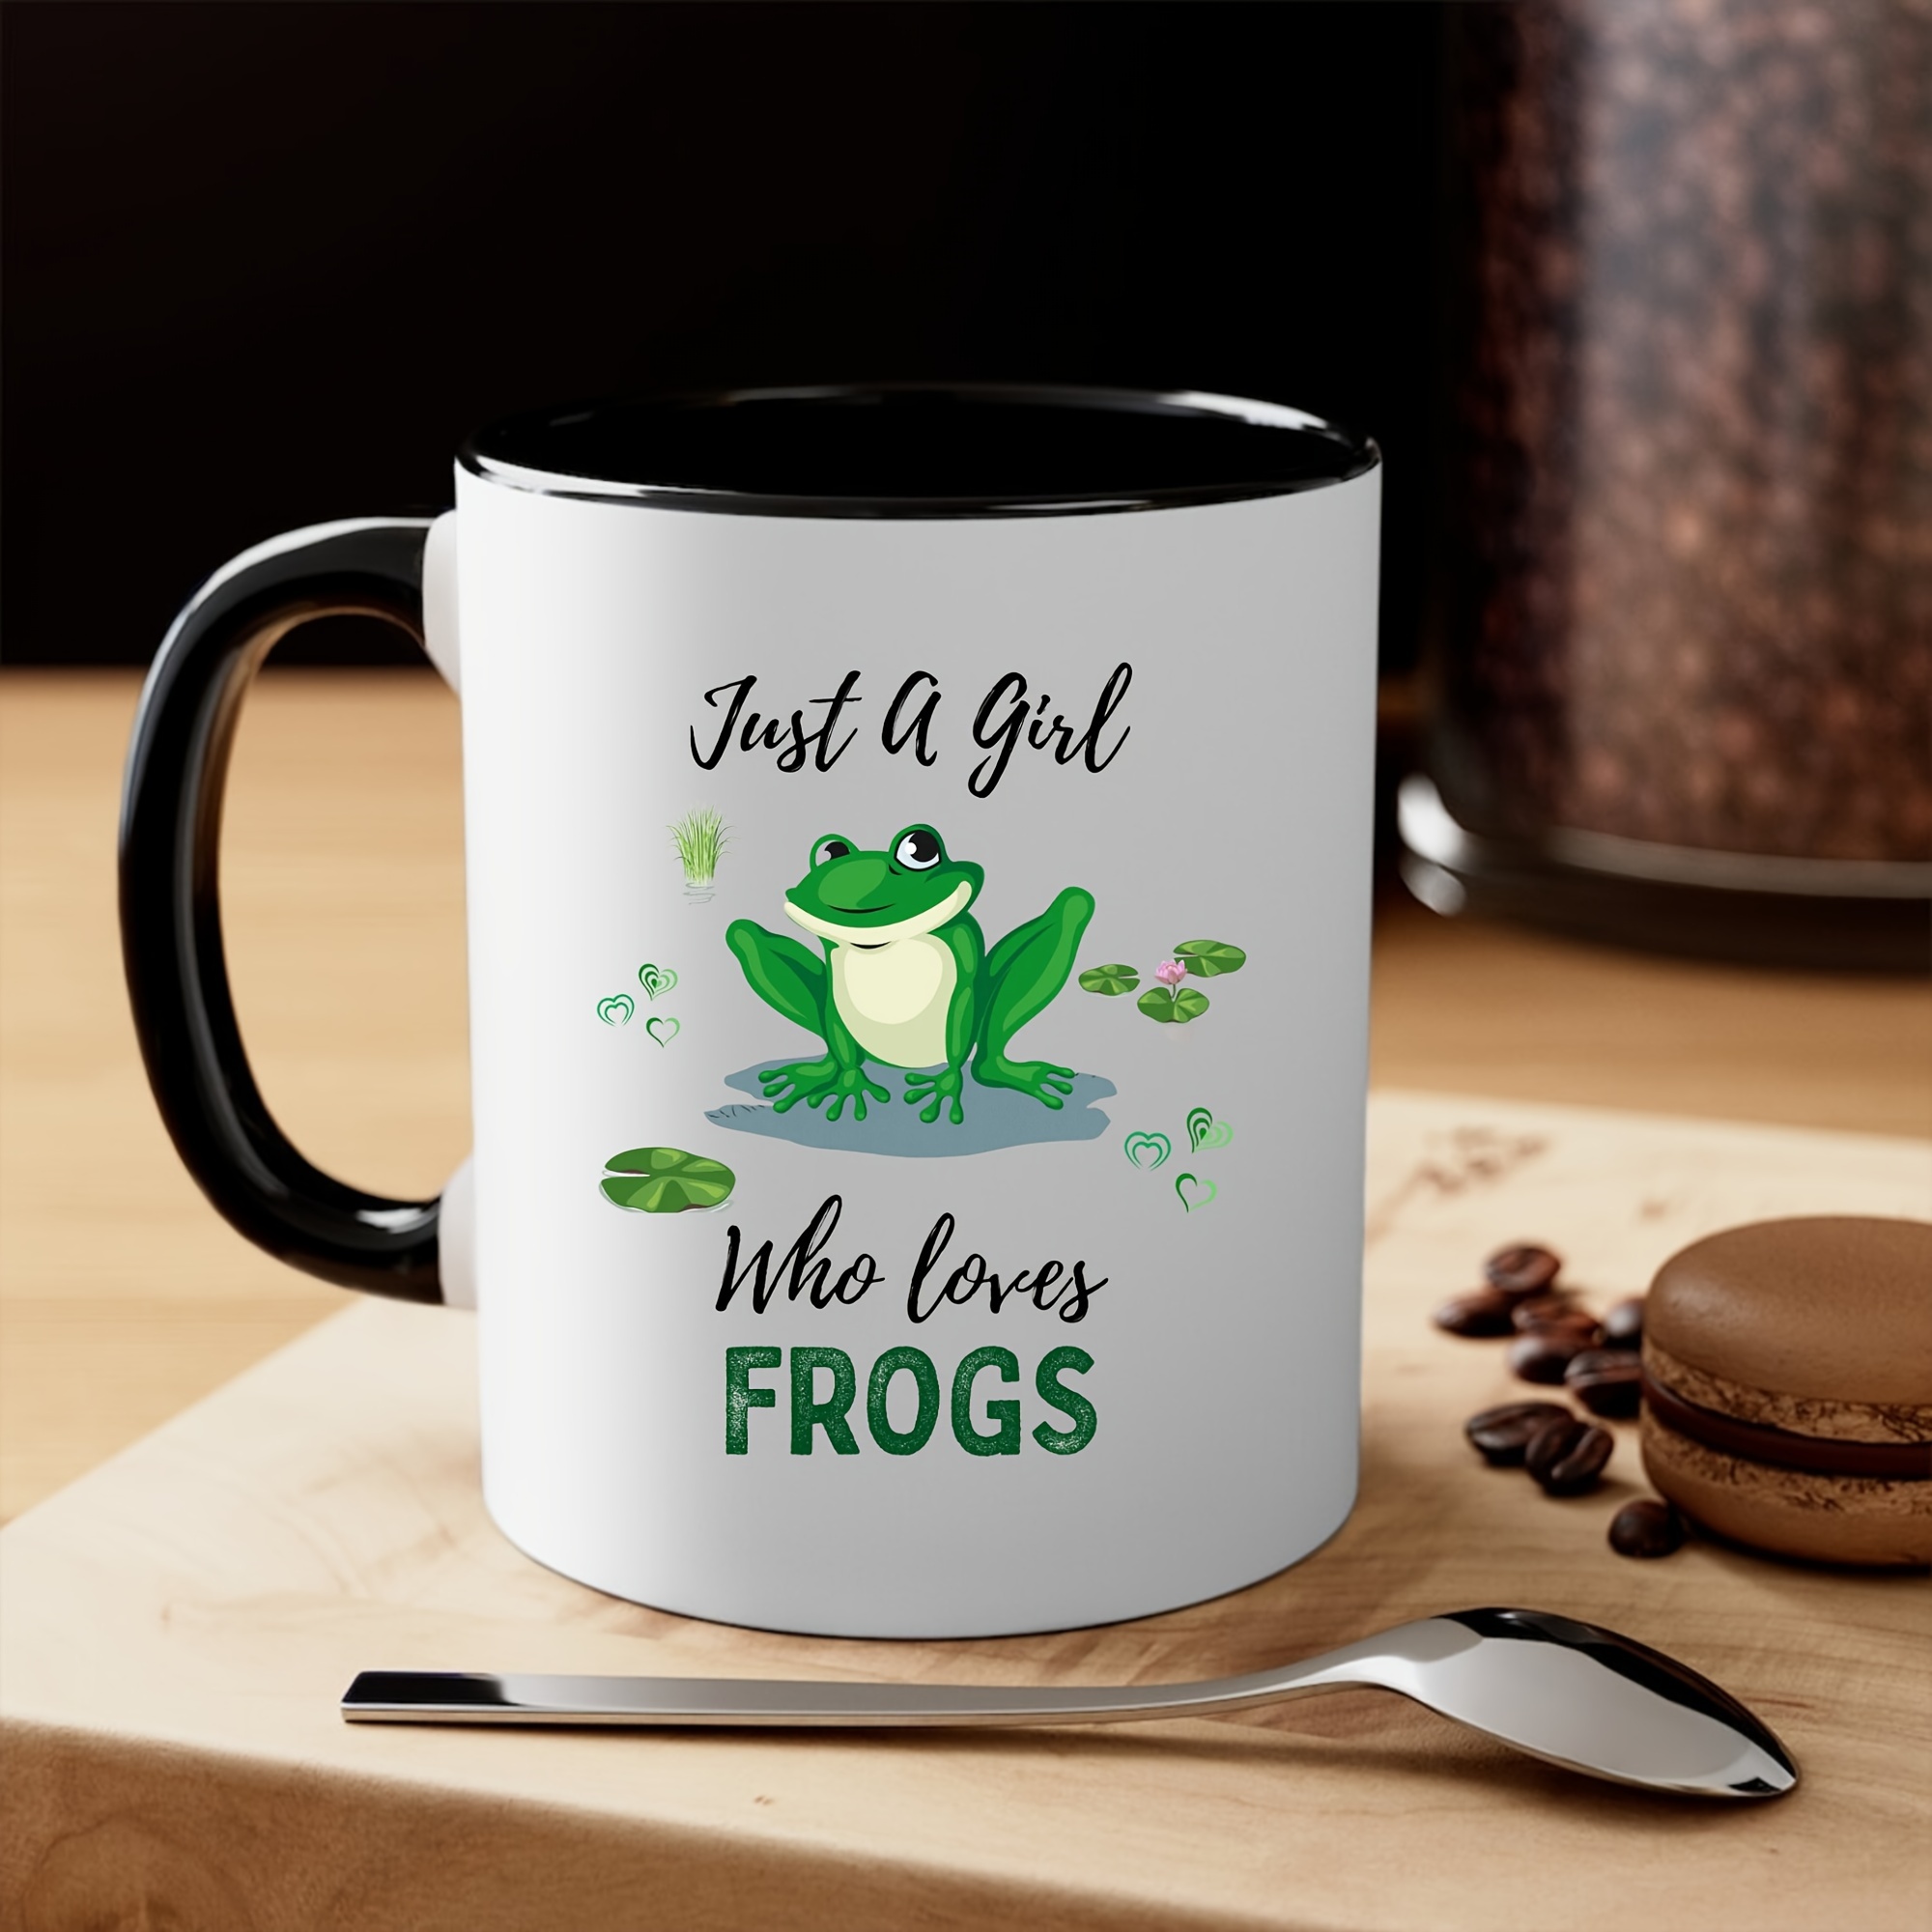 1pc, Crazy Frog Lady Mug, Frog Mug For Frog Lovers, 11oz / 15oz Ceramic  Coffee Mug, Cute Frog Cup, Christmas Gift For Him Or Her